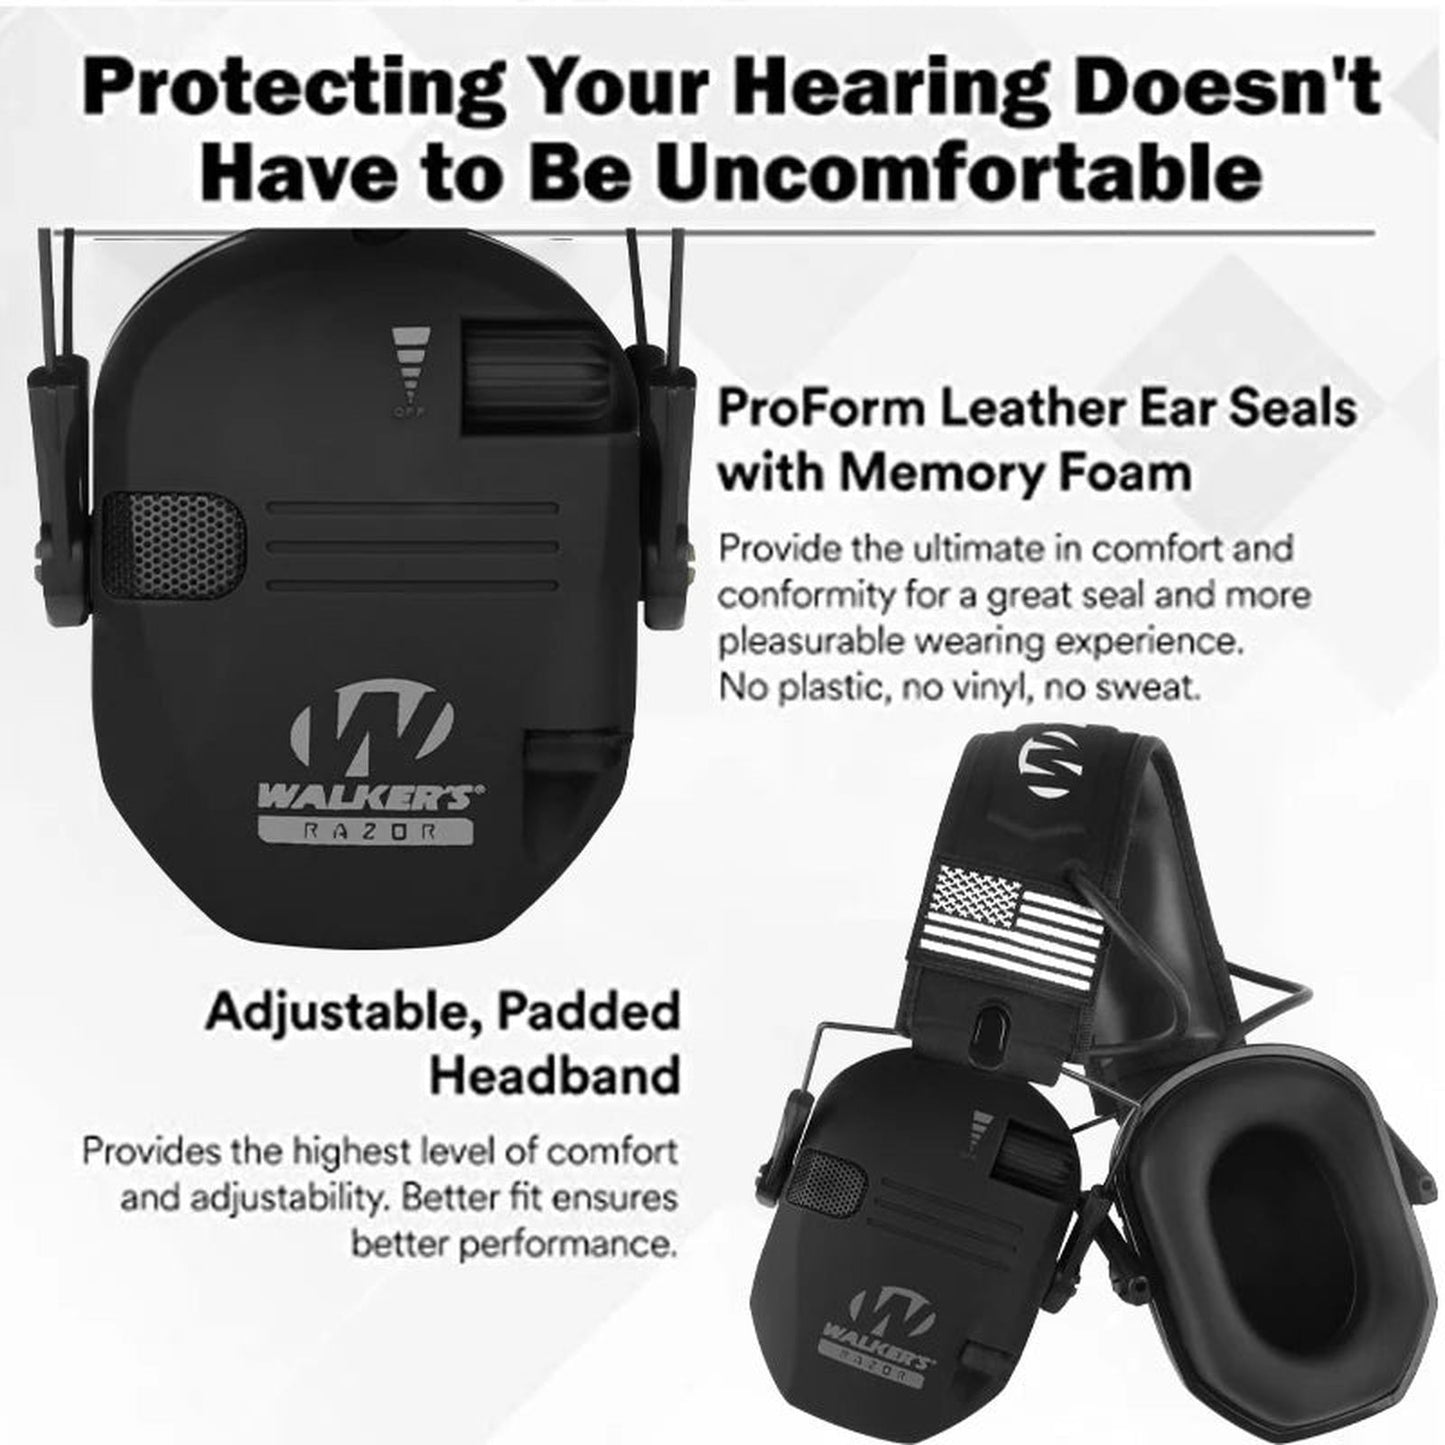 Foldable 2024 Tactical Electronic Shooting Earmuff Anti-noise Headphone - ARCHE